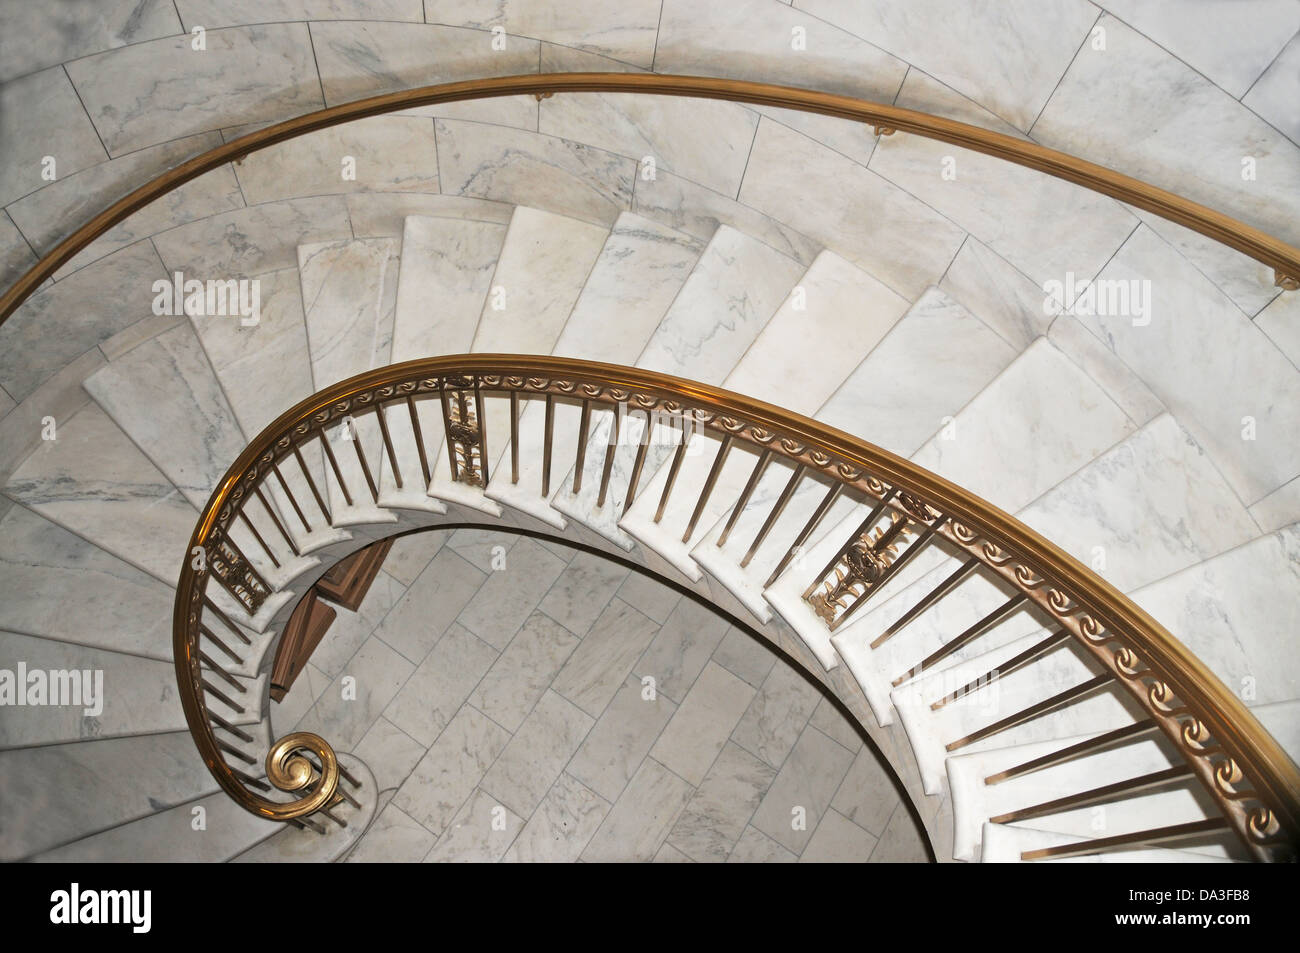 USA Washington D.C. United States Supreme Court Building interior spiral staircase Stock Photo